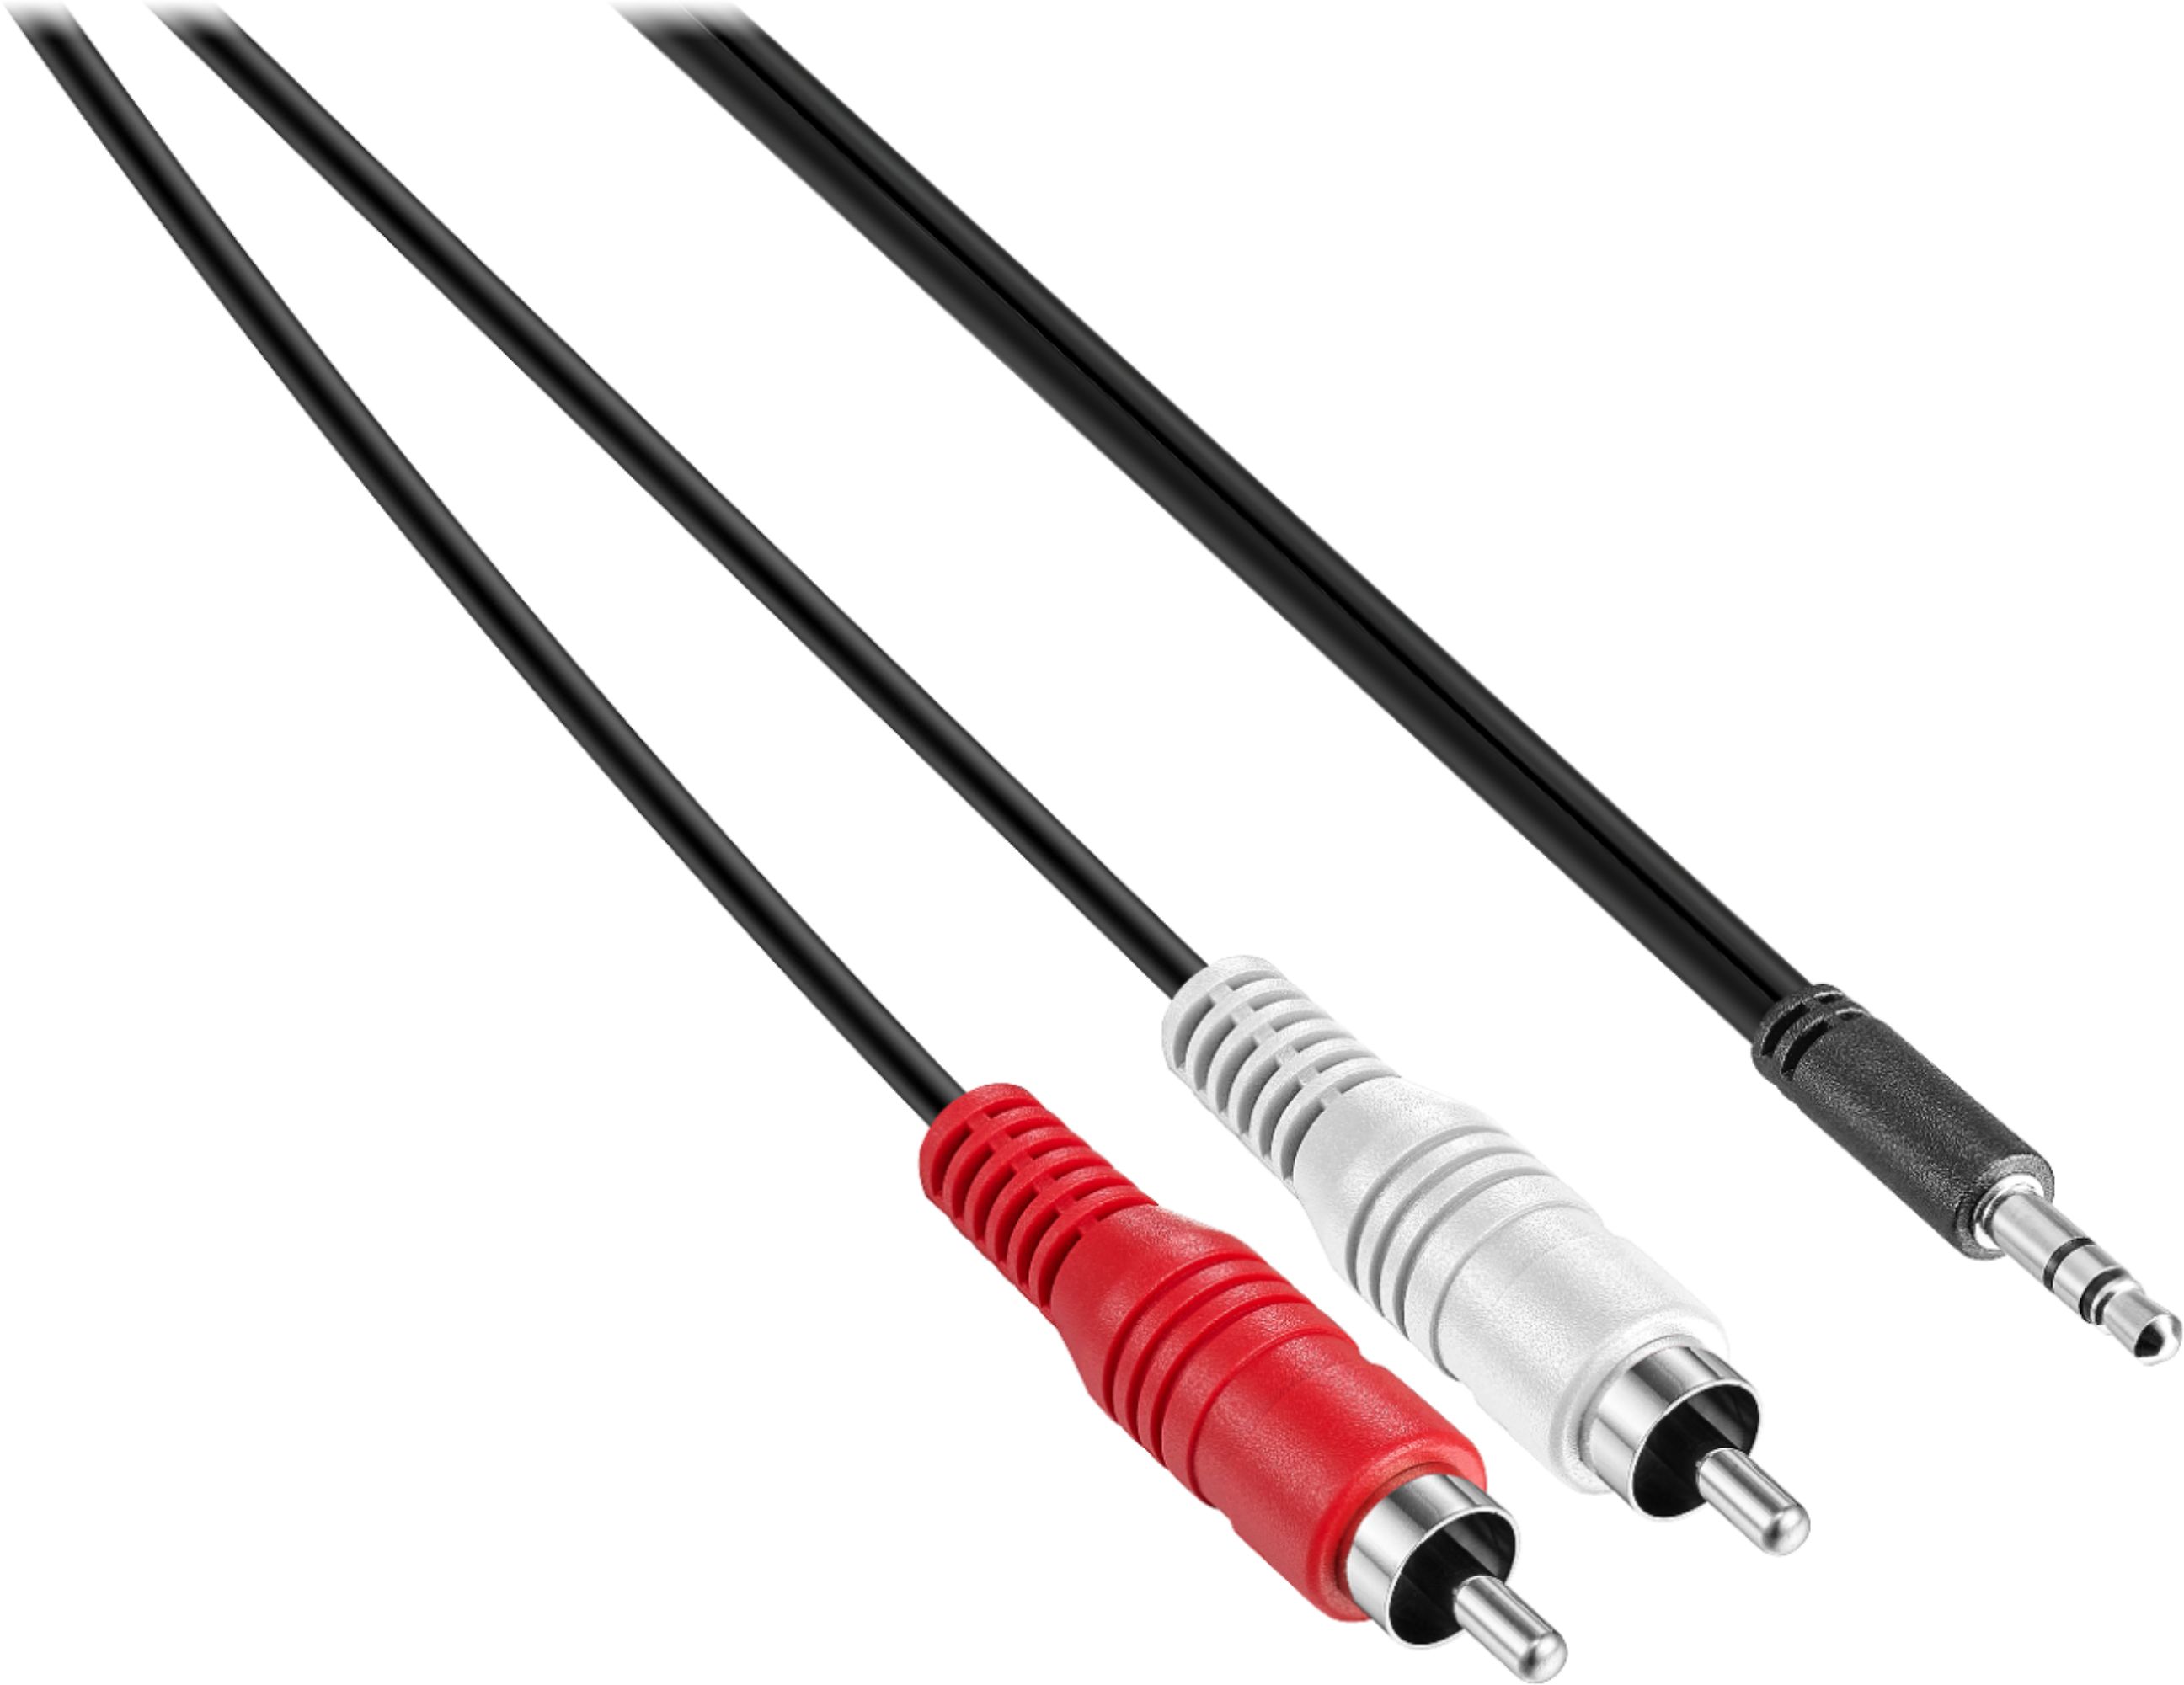 Comprar Cable Jack 3.5 Macho a Jack 3.5 Hembra de 3 m Online